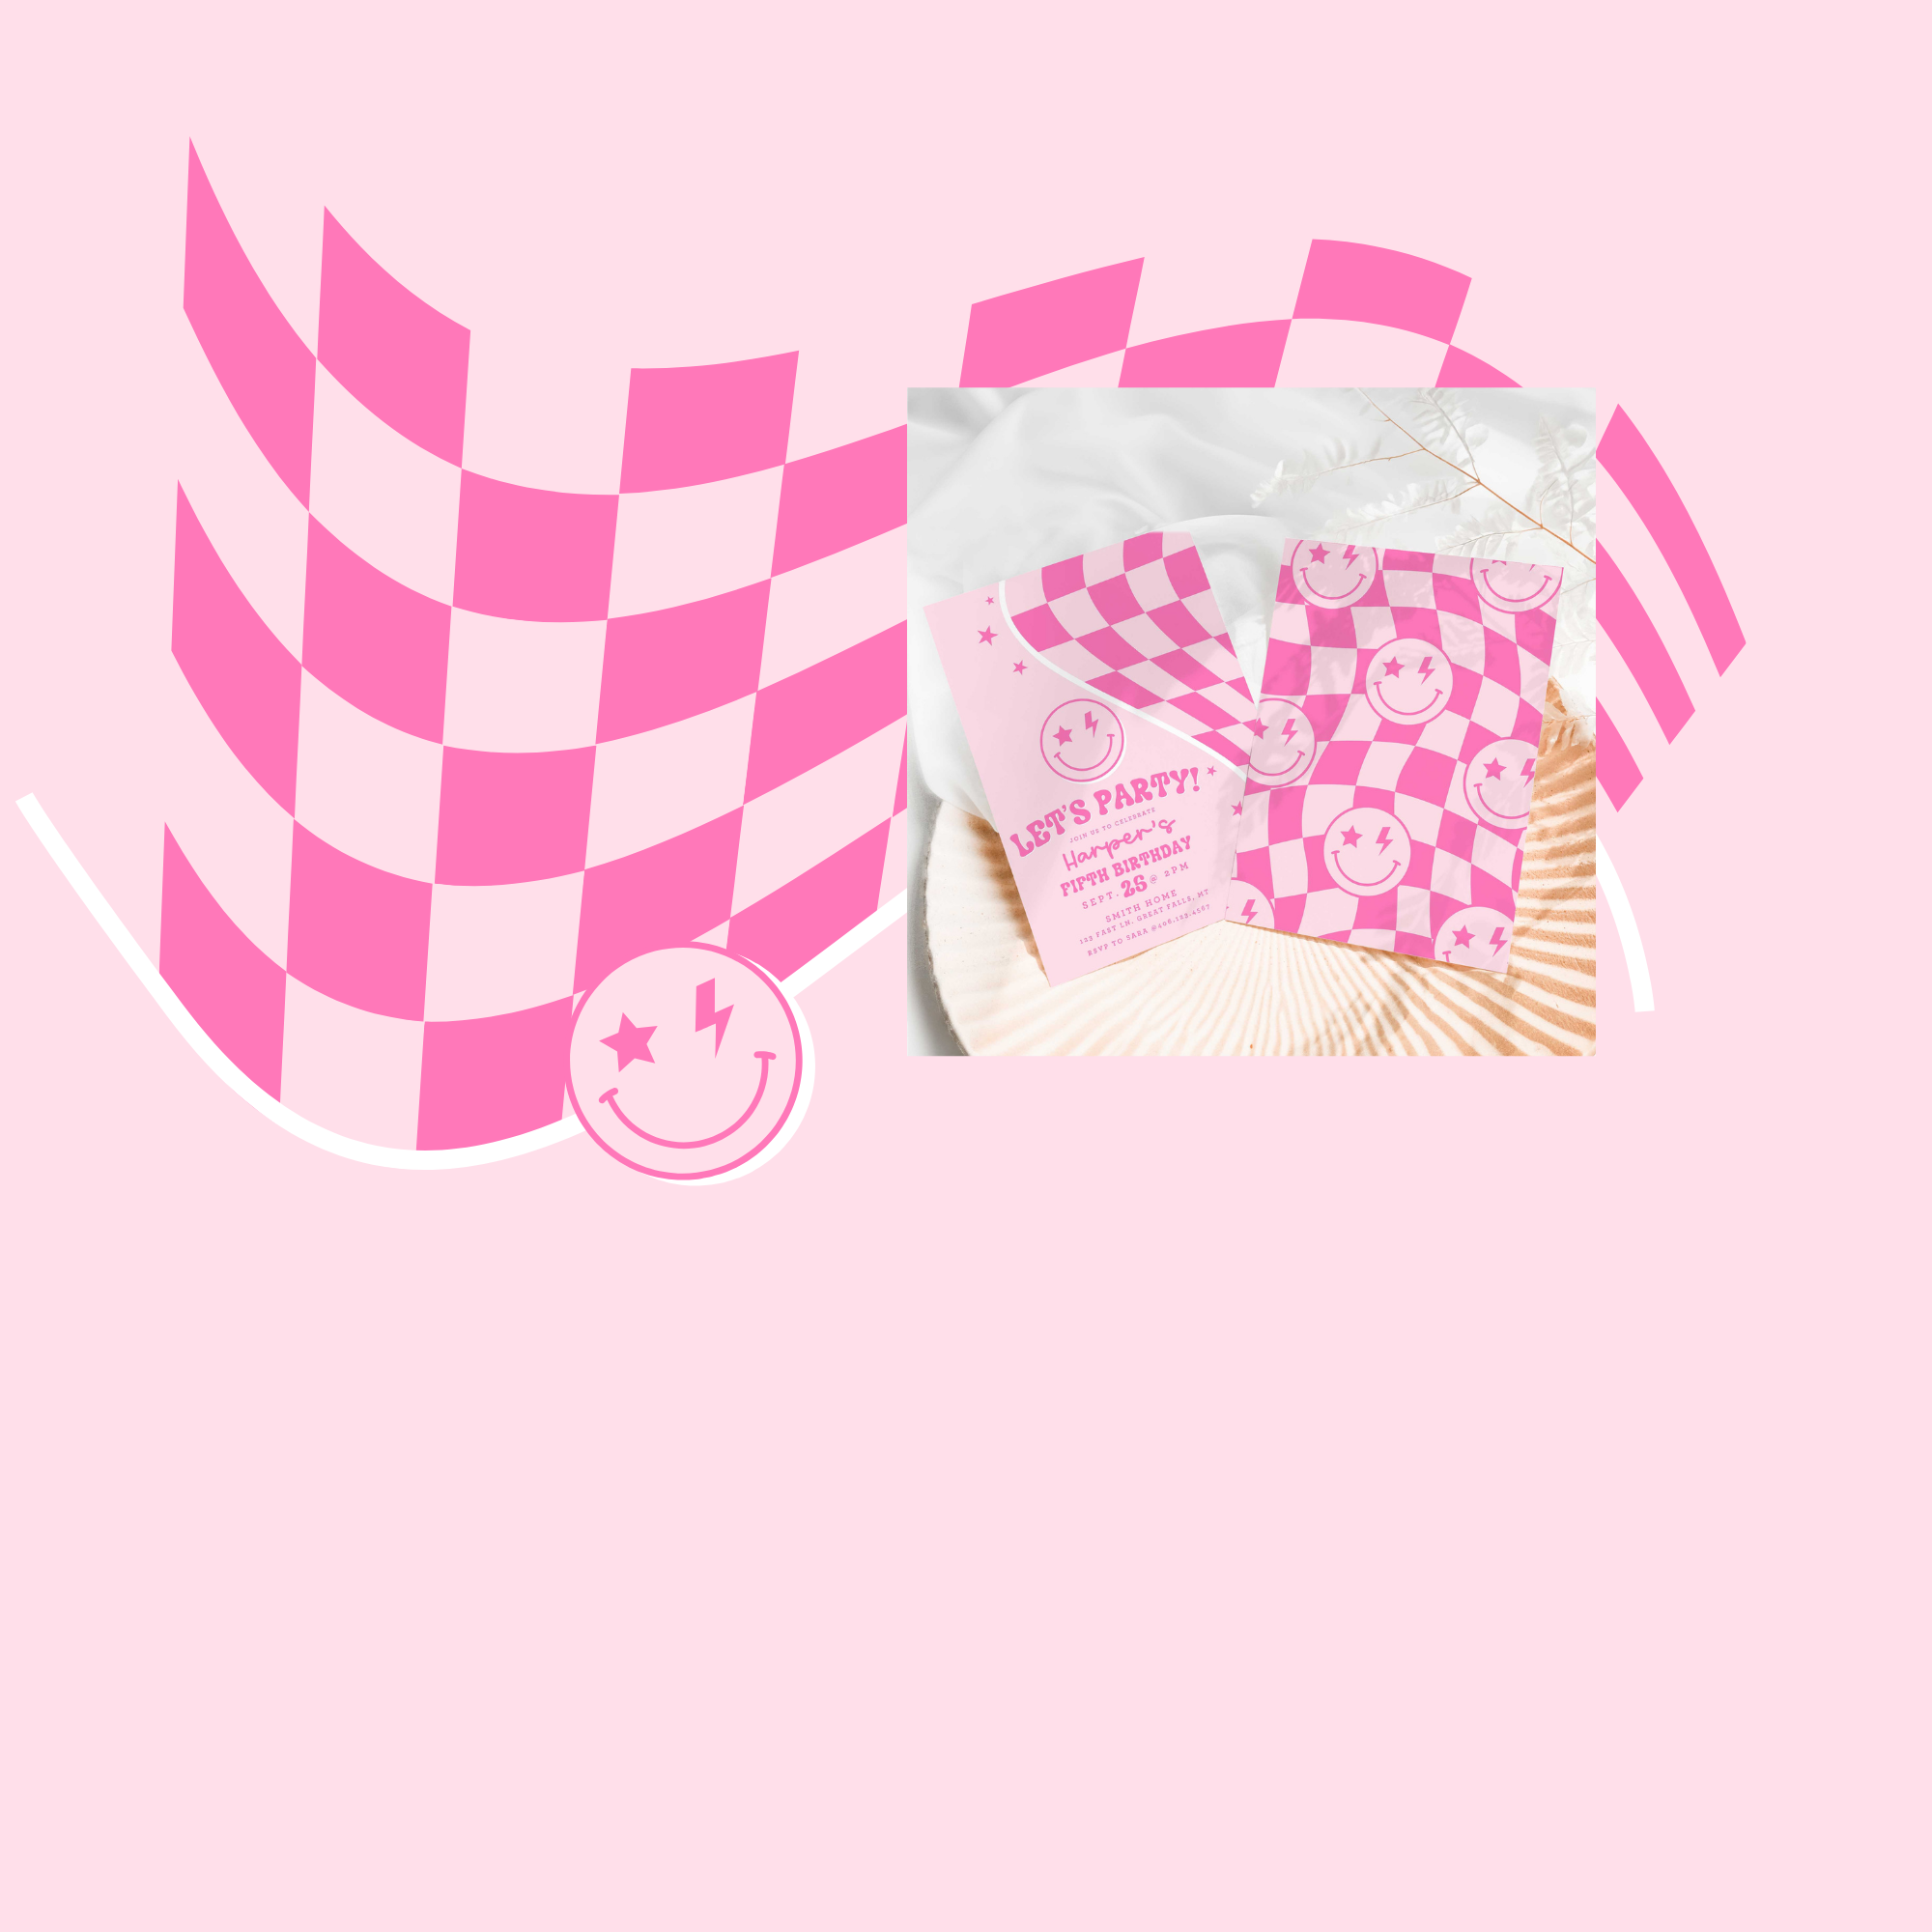 Preppy Retro Pink Smiley Printable birthday decorations by High Peaks Studios